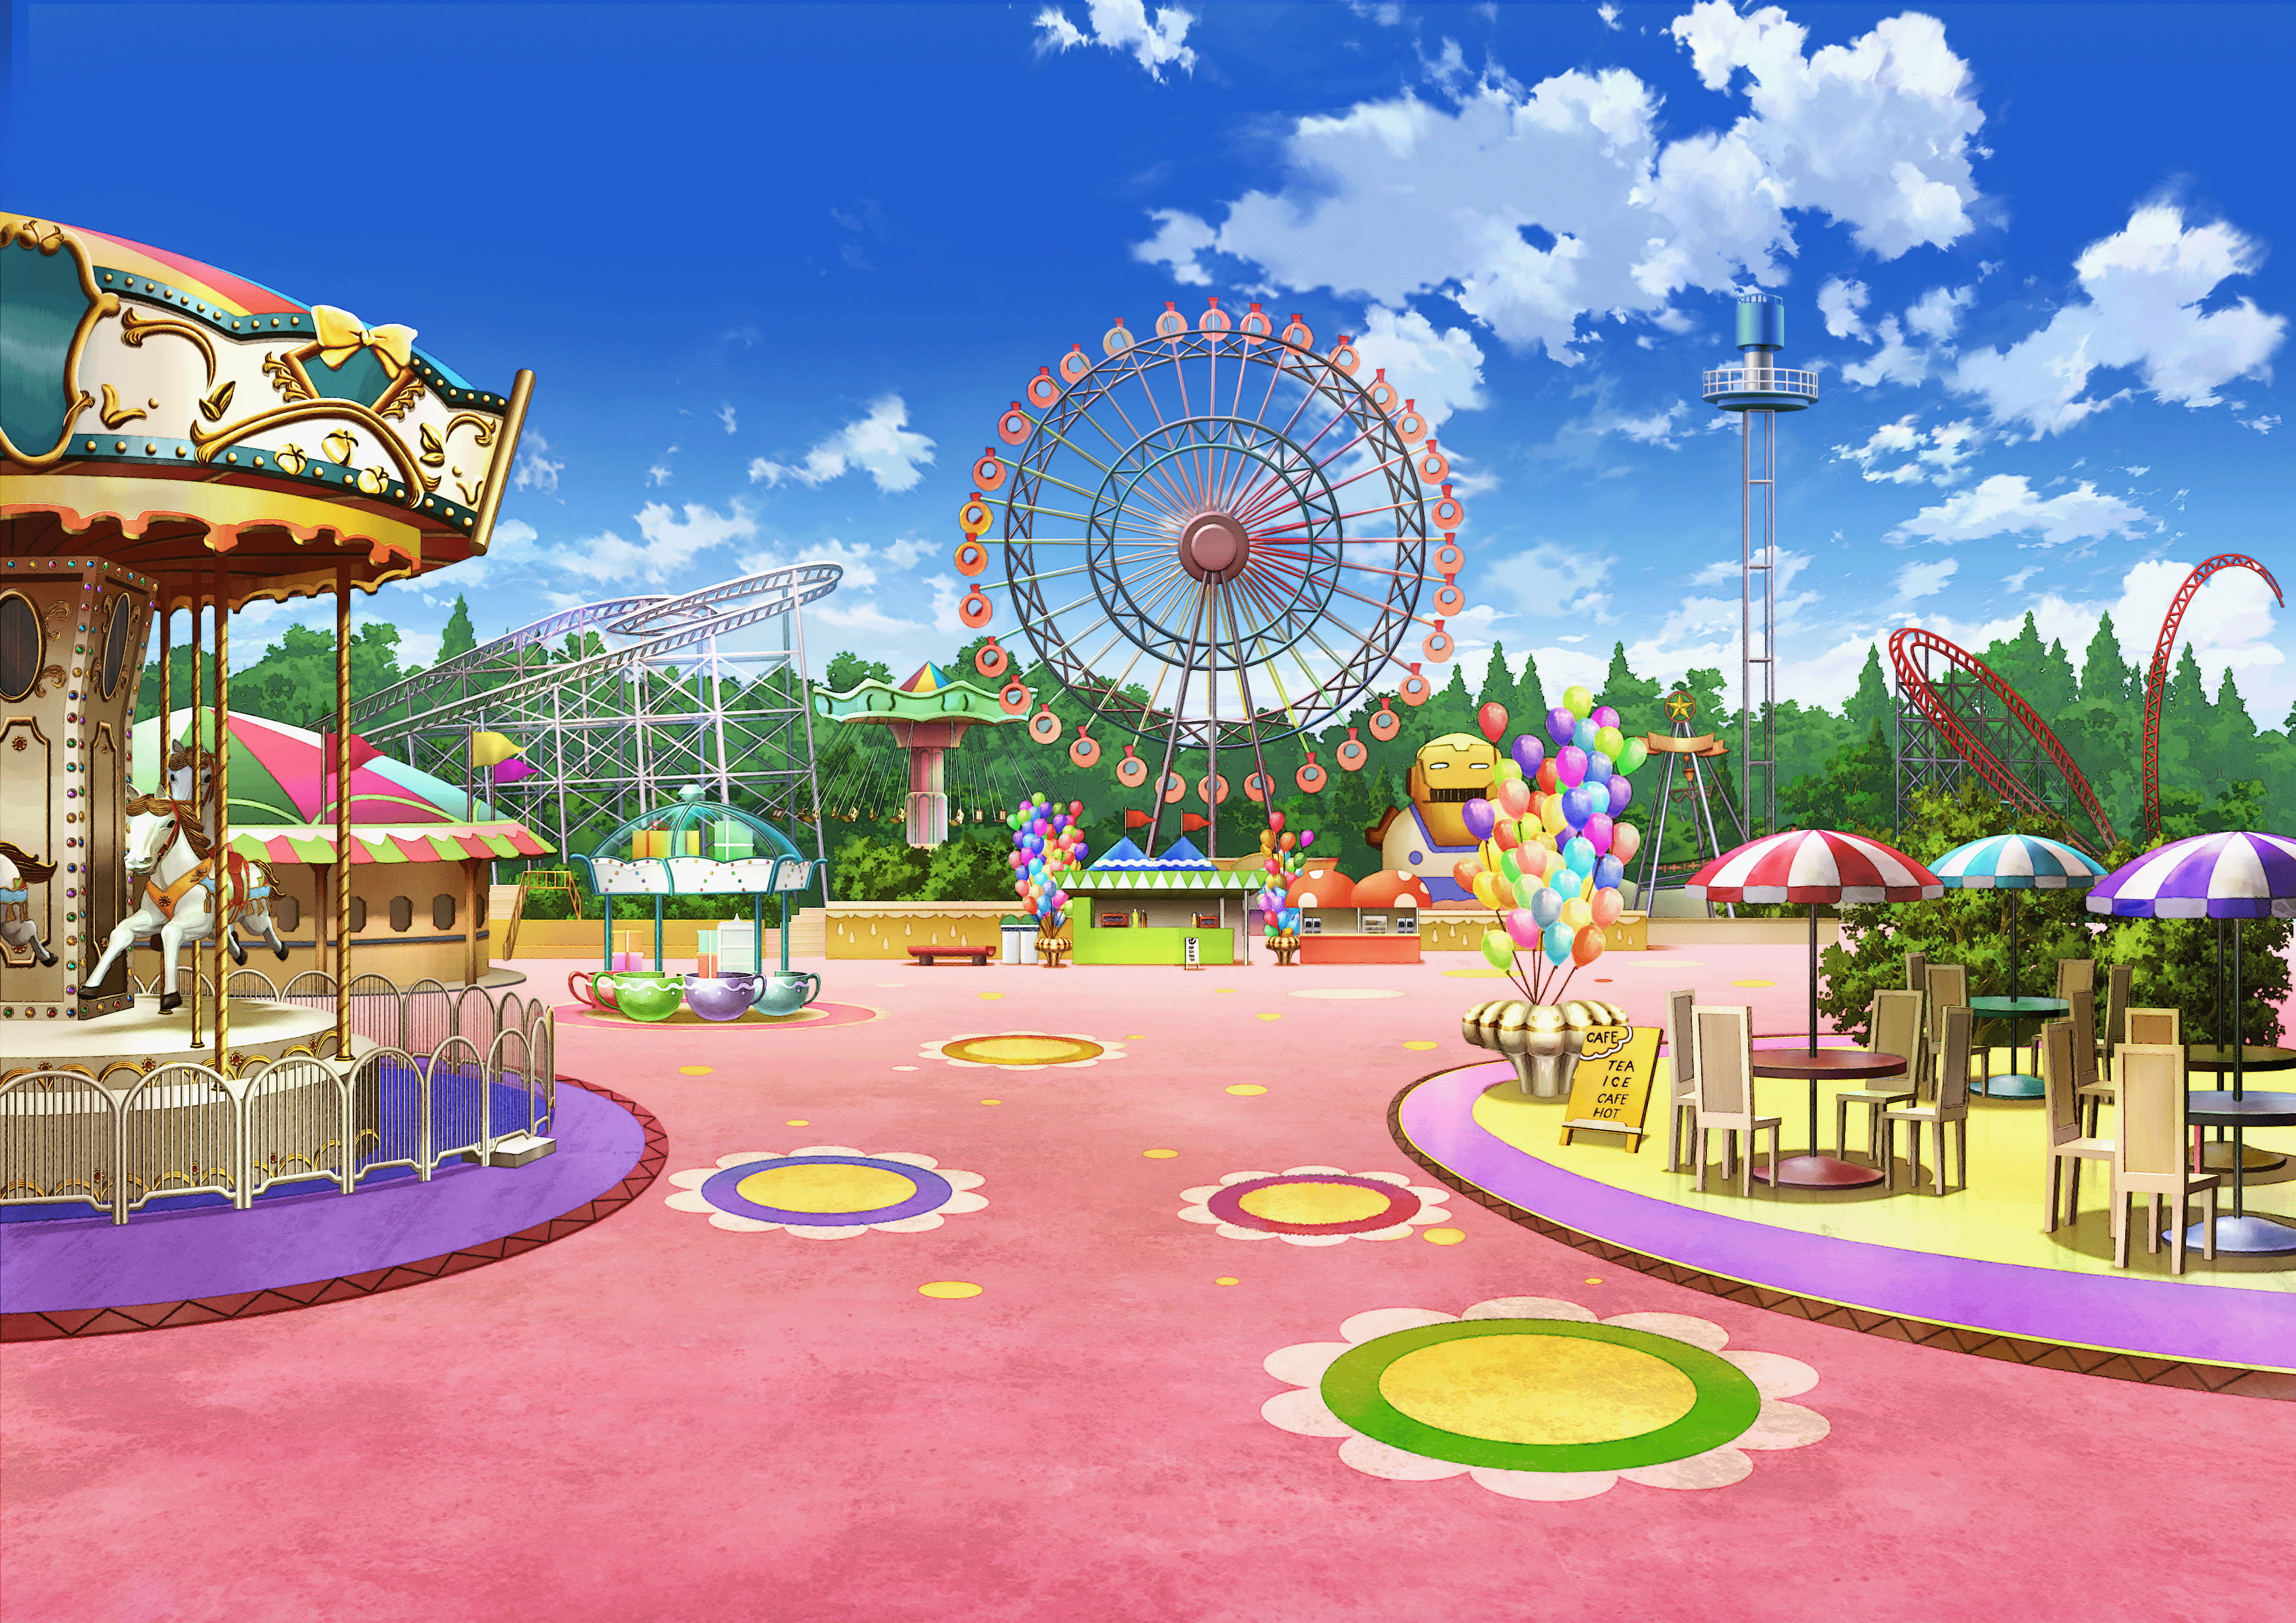 Carousel | Art background, Original image, Anime images